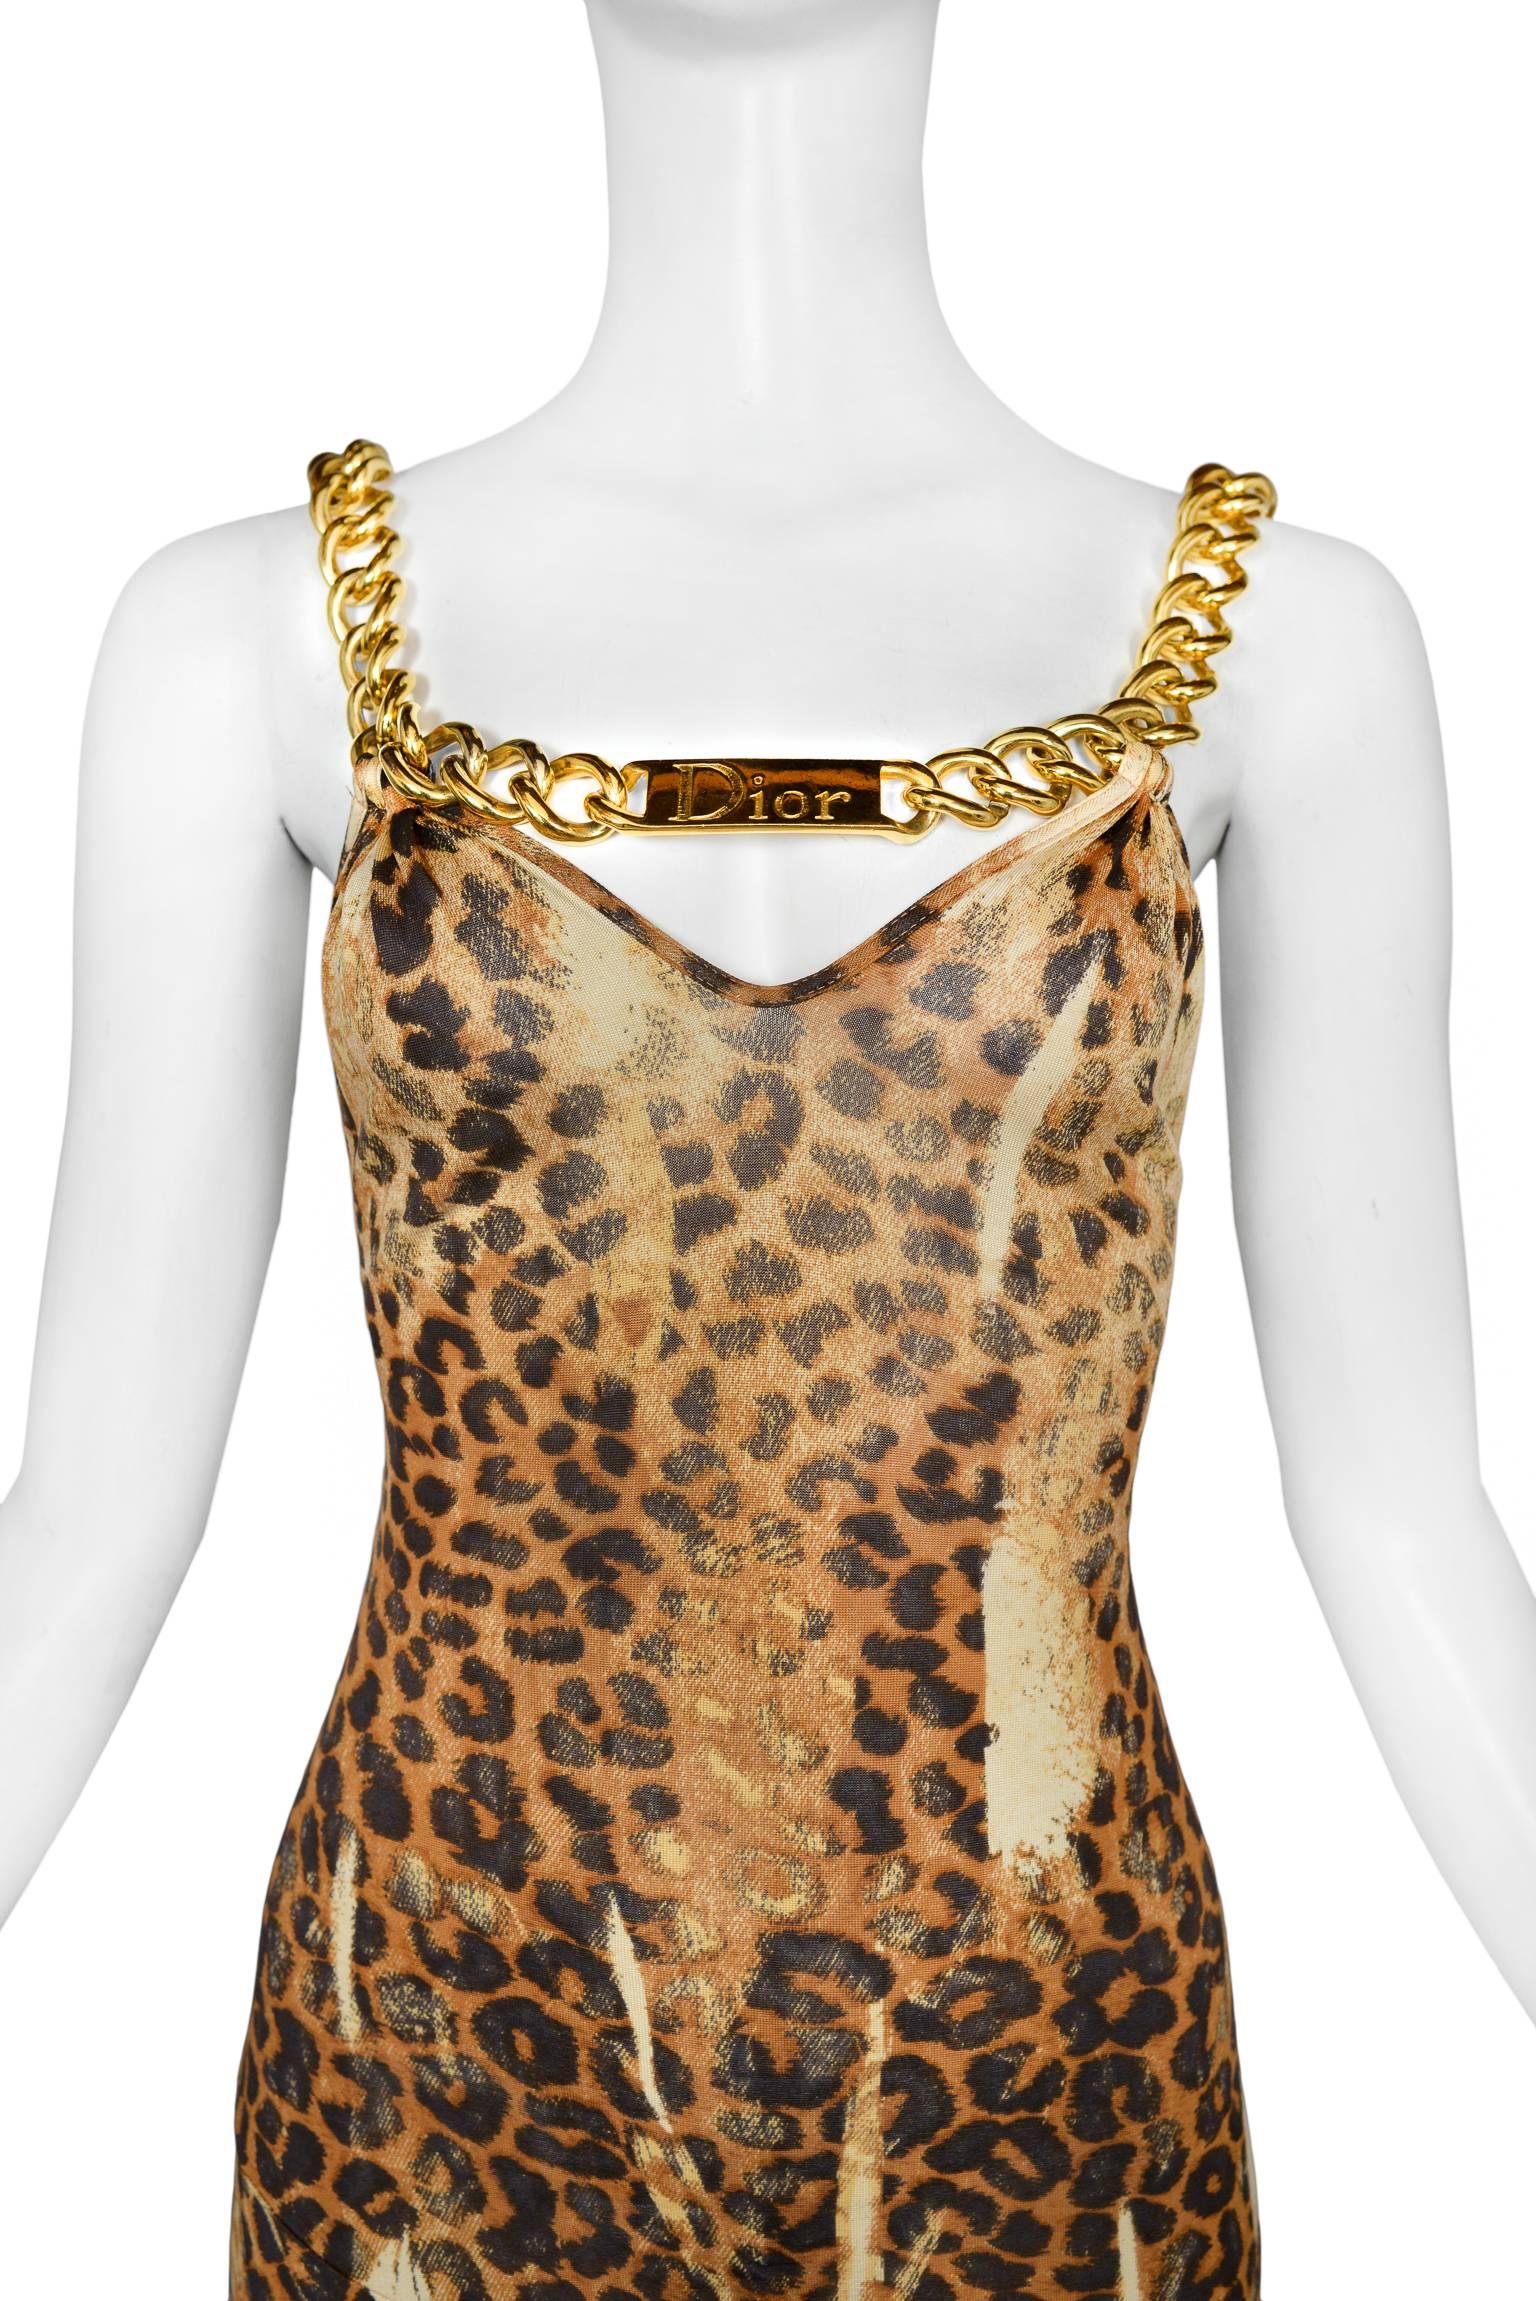 dior gold chain dress